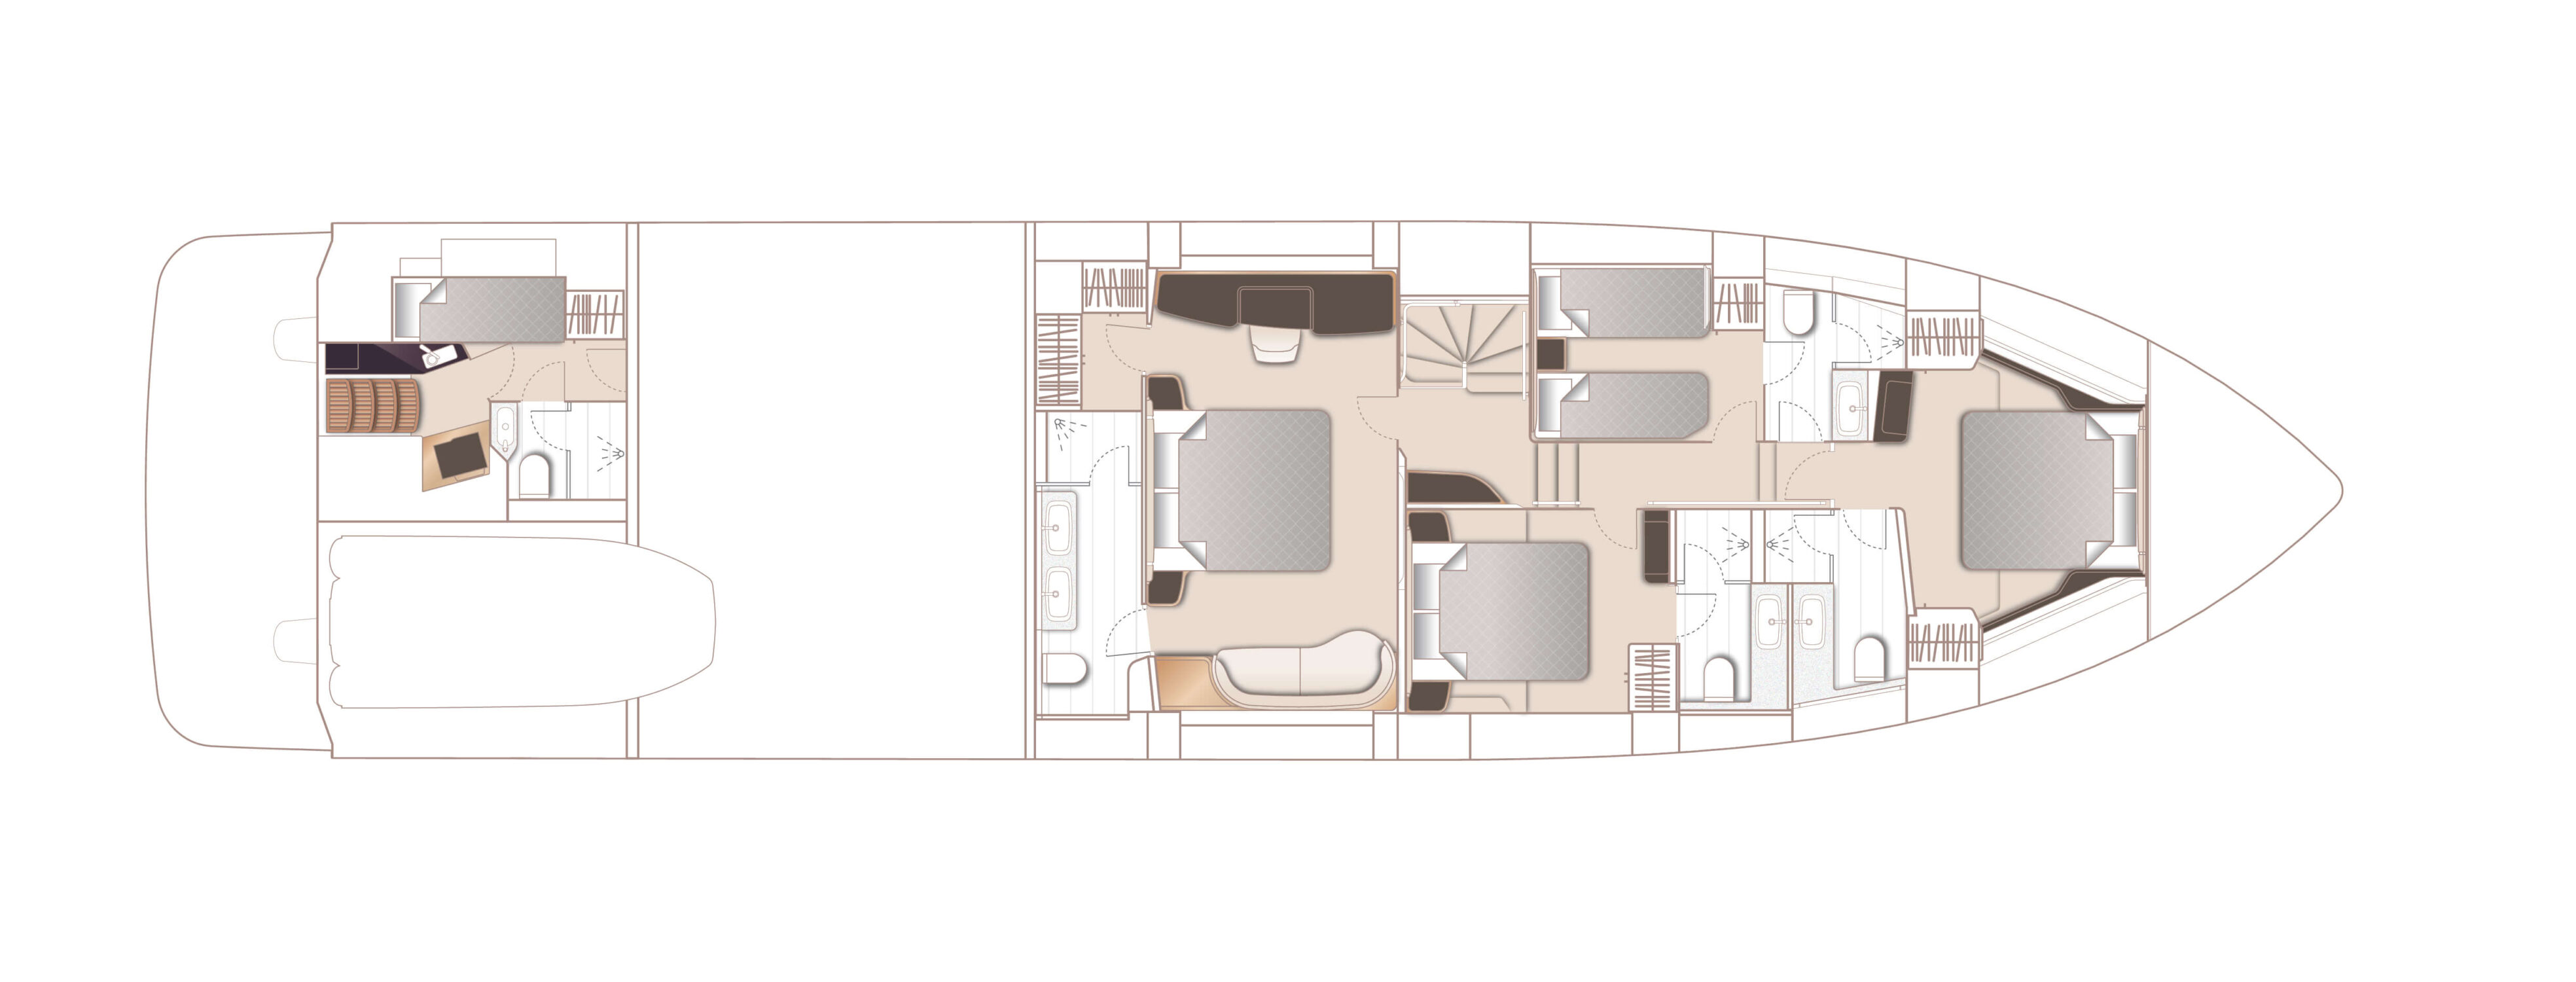 Princess S80 lower deck layout